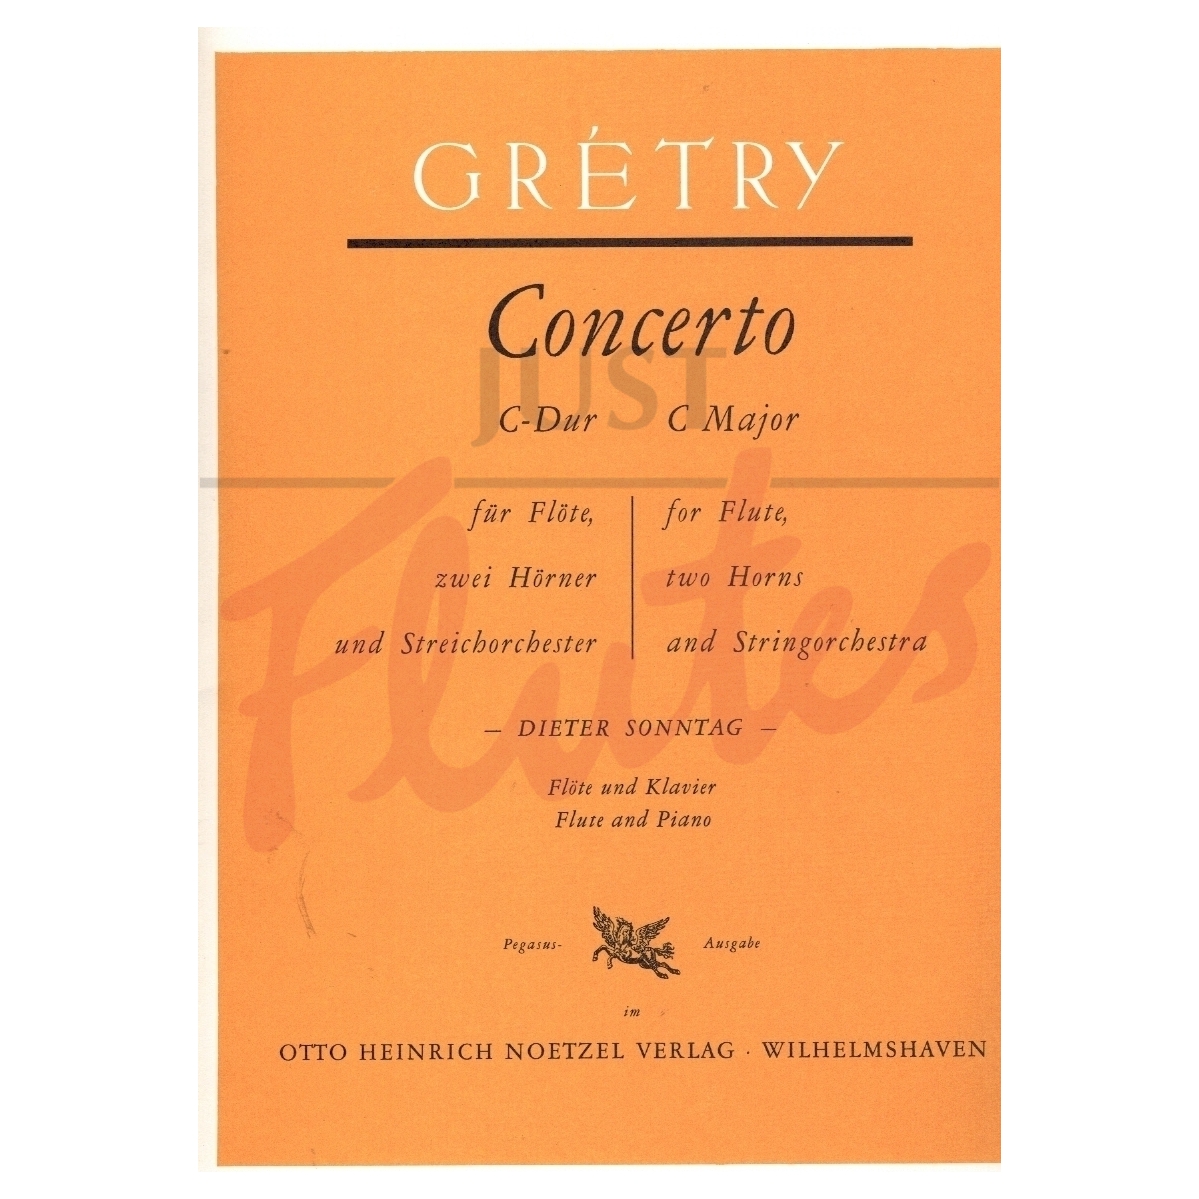 Flute Concerto in C major